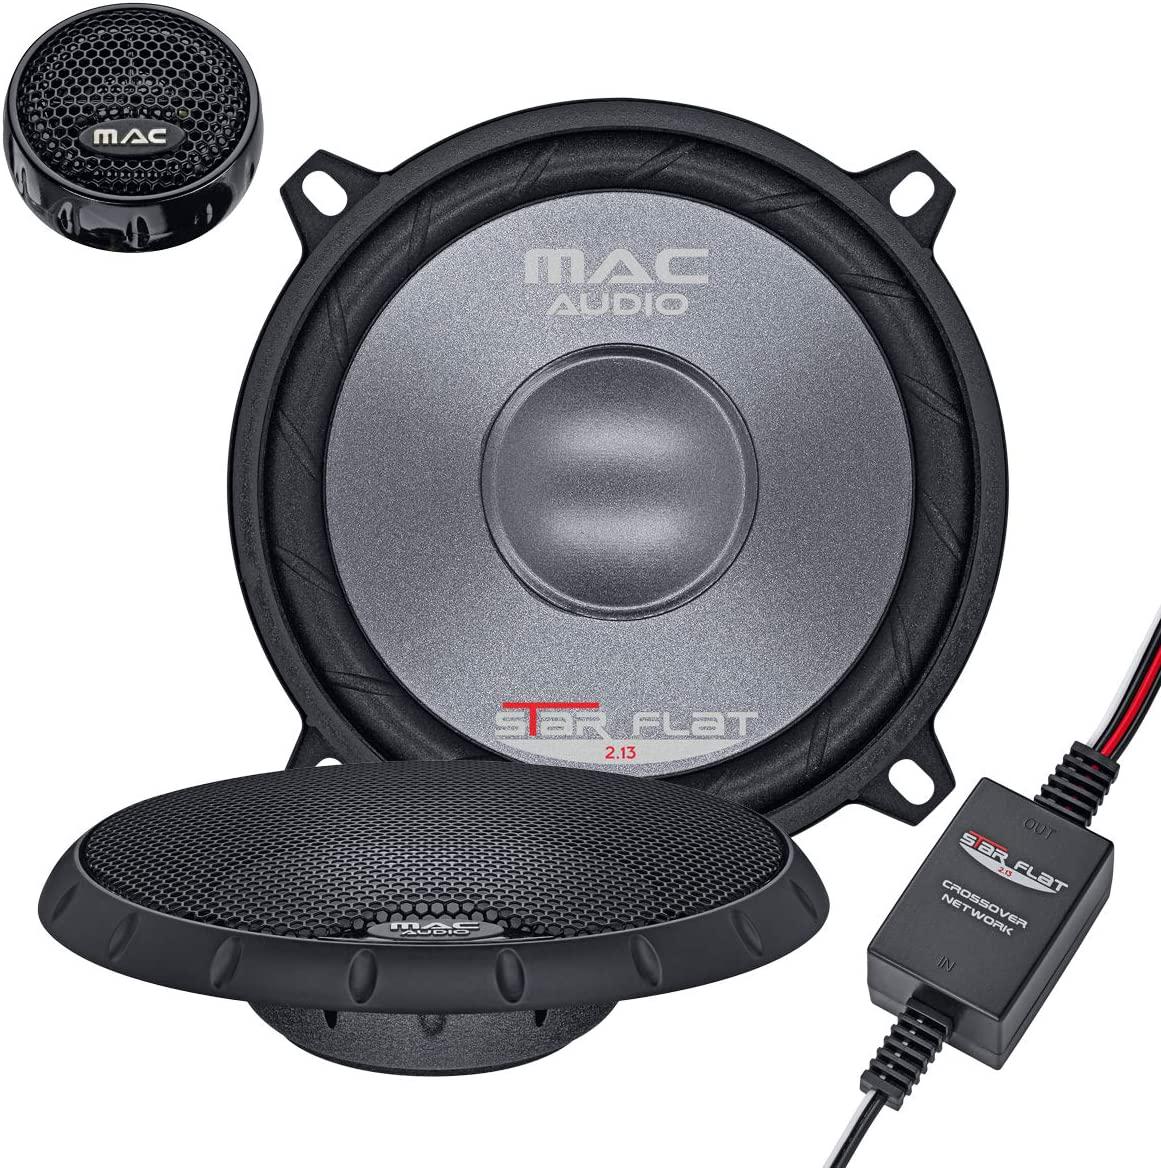 MAC AUDIO, Mac Audio 1107133 Star Flat 13.2 Ultra Flat 2-Way Coaxial Built-in Speaker